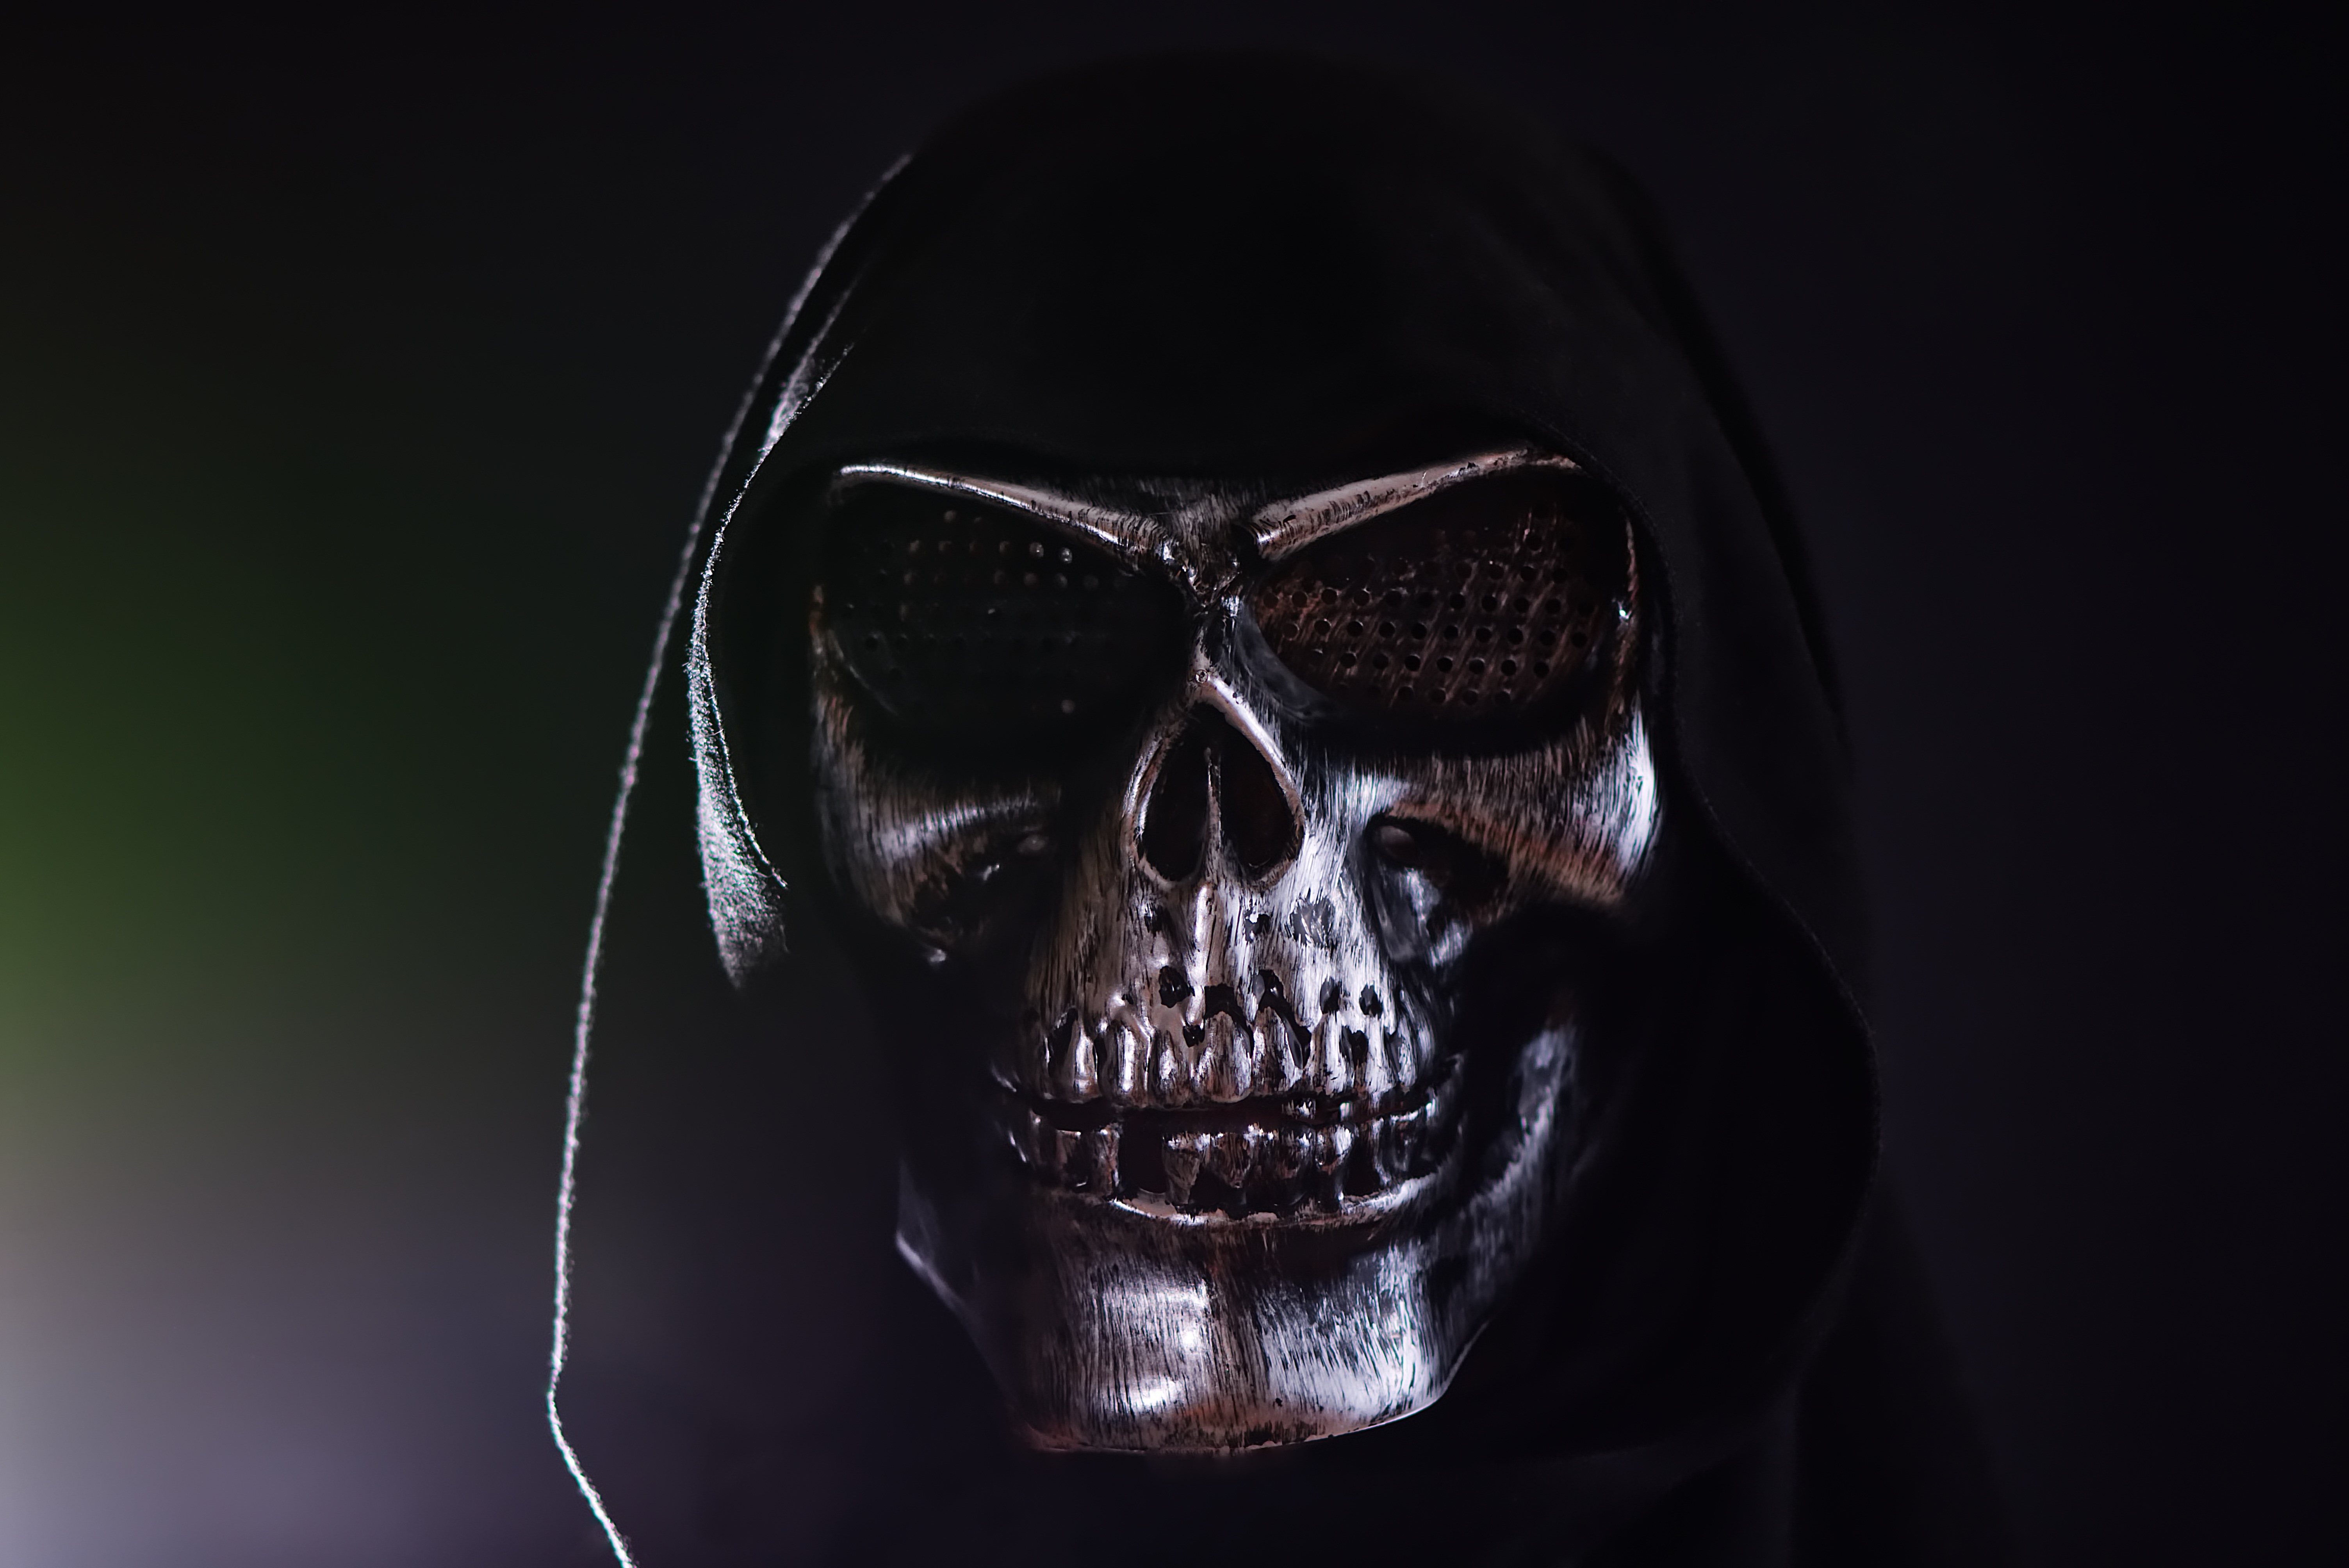 Download 6016x4016 Skull Mask, Black Hoodie, Scary, Horror Wallpaper